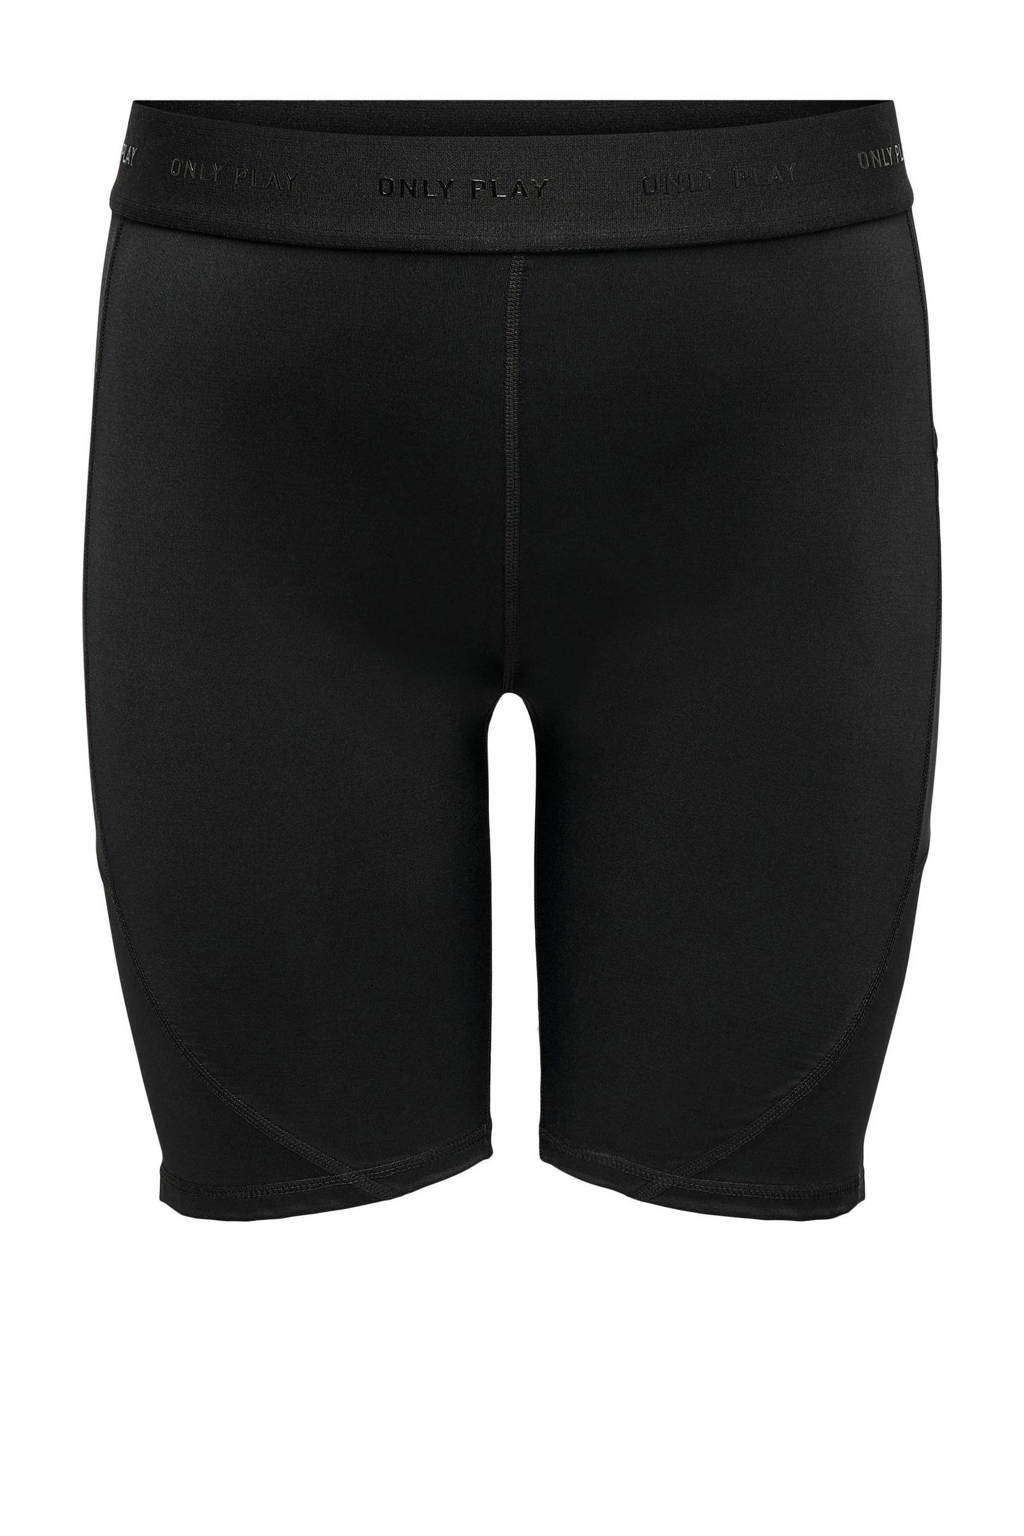 Zwarte dames ONLY PLAY CURVY Plus Size sportshort Opbalix met slim fit, regular waist en elastische tailleband